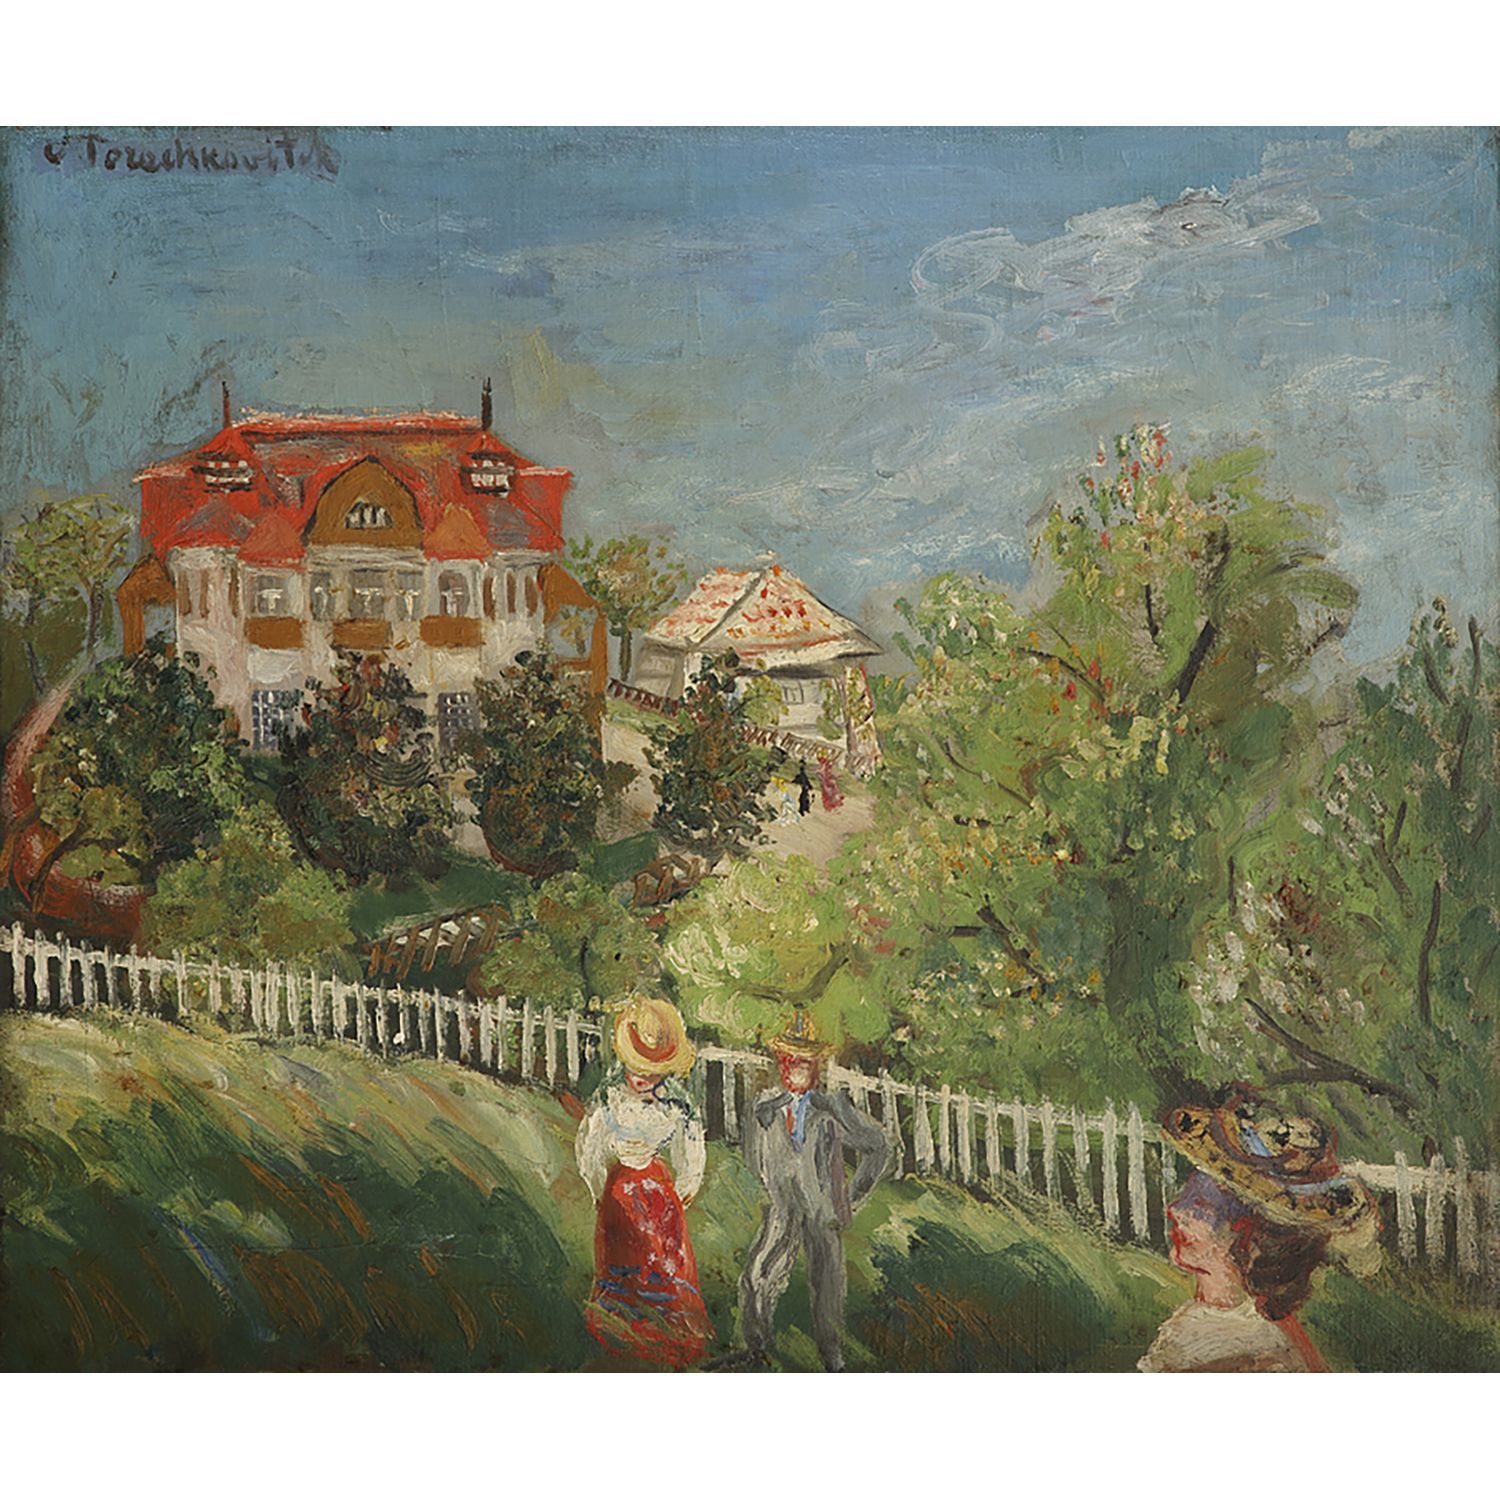 Null 康斯坦丁-特列奇科维奇(1902-1978)

周末在大夏

布面油画

左上角有签名

布面油画；左上方有签名

46 x 55 cm - 18 1&hellip;